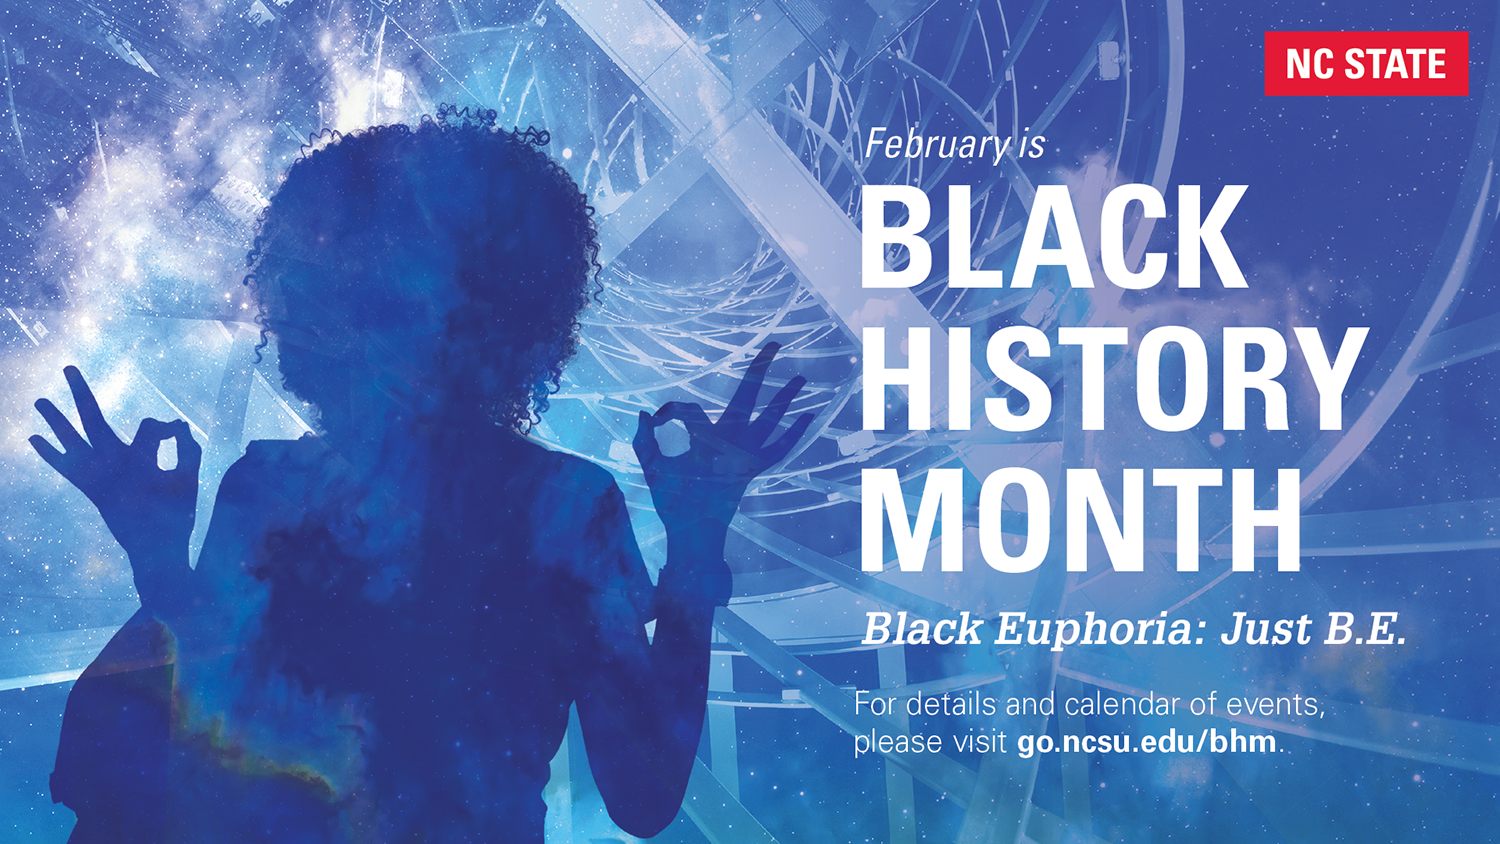 Black History Month billboard Black Euphoria: B.E. For details and calendar of events, please visit go.ncsu.edu/bhm